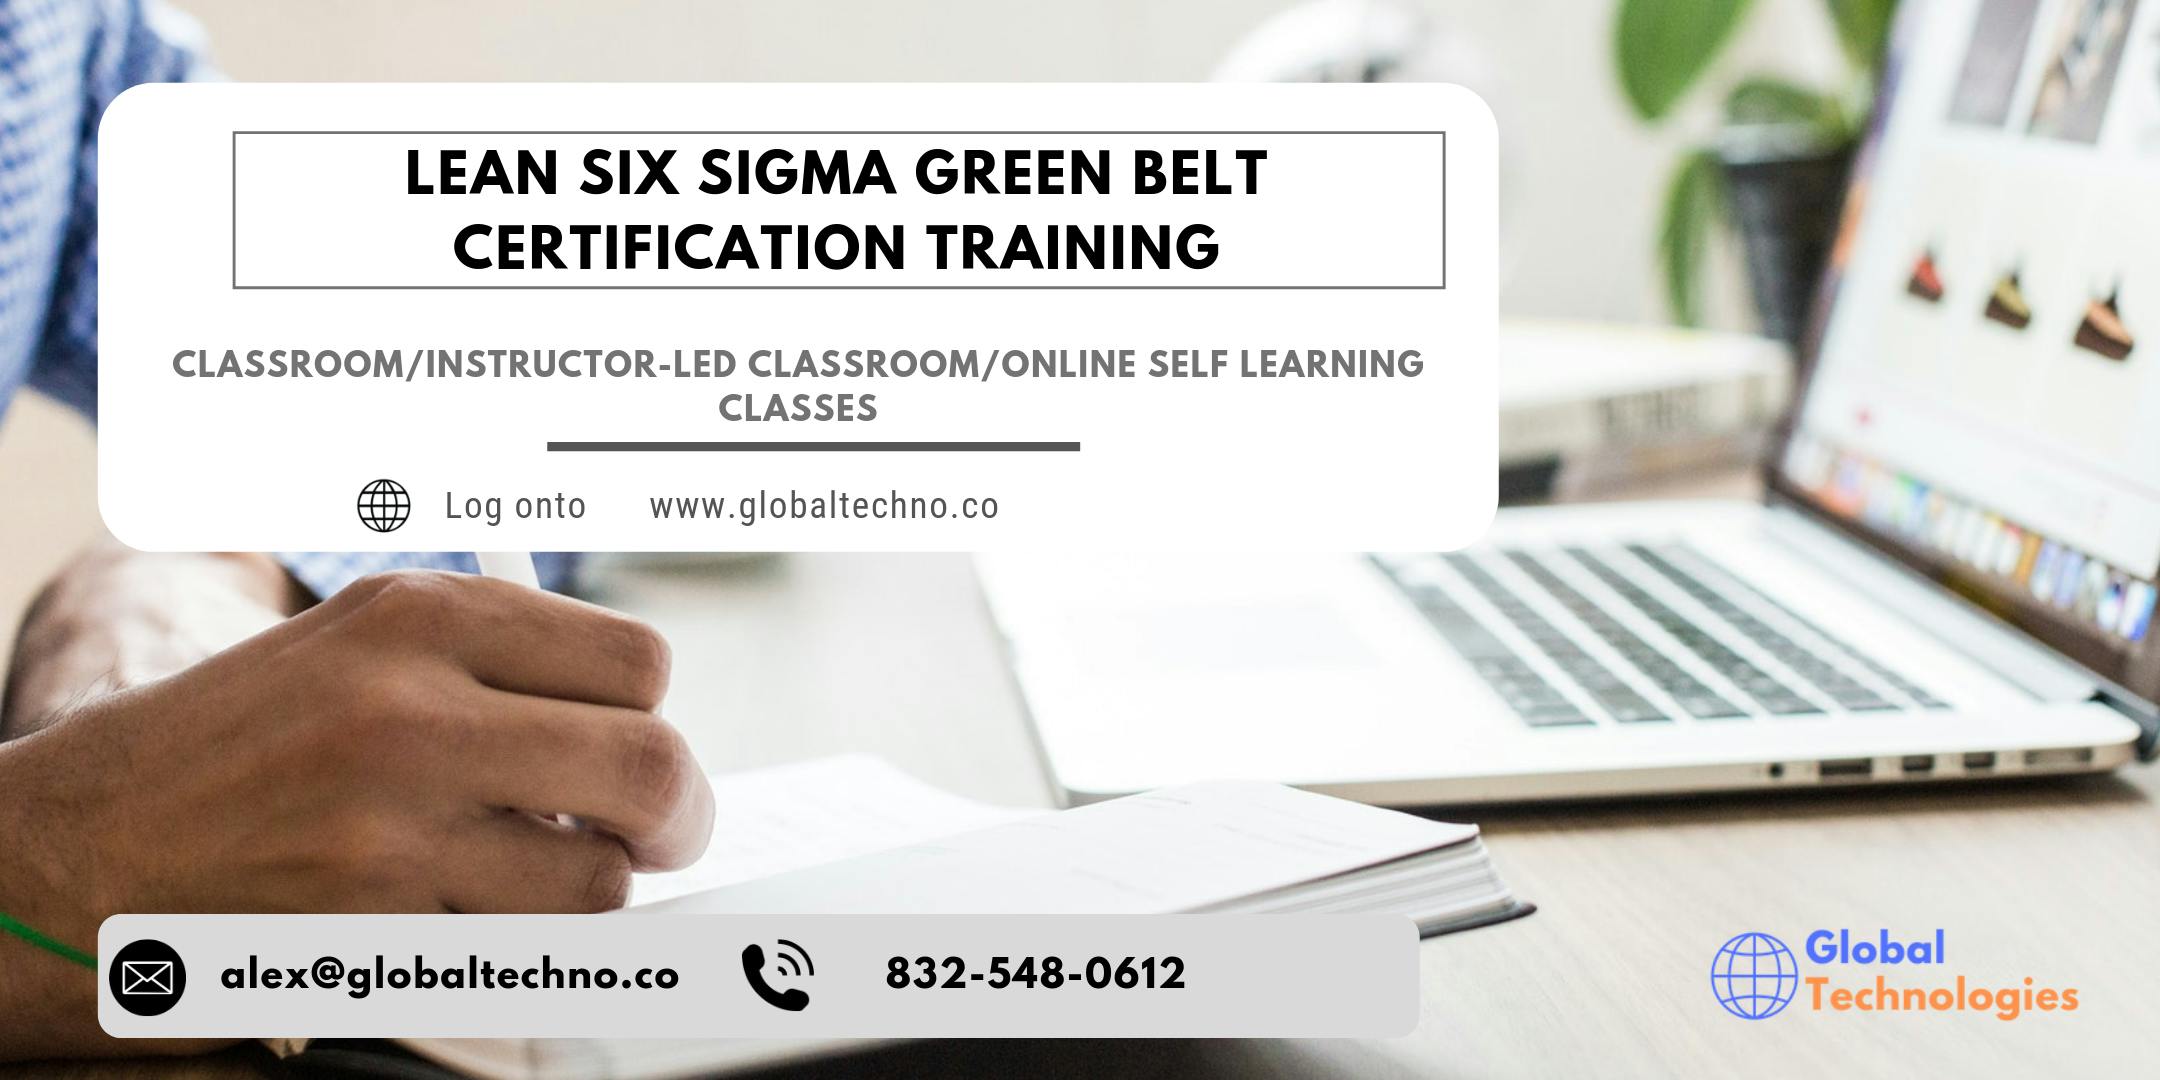 Lean Six Sigma Green Belt (LSSGB) Certification Training in Las Vegas, NV